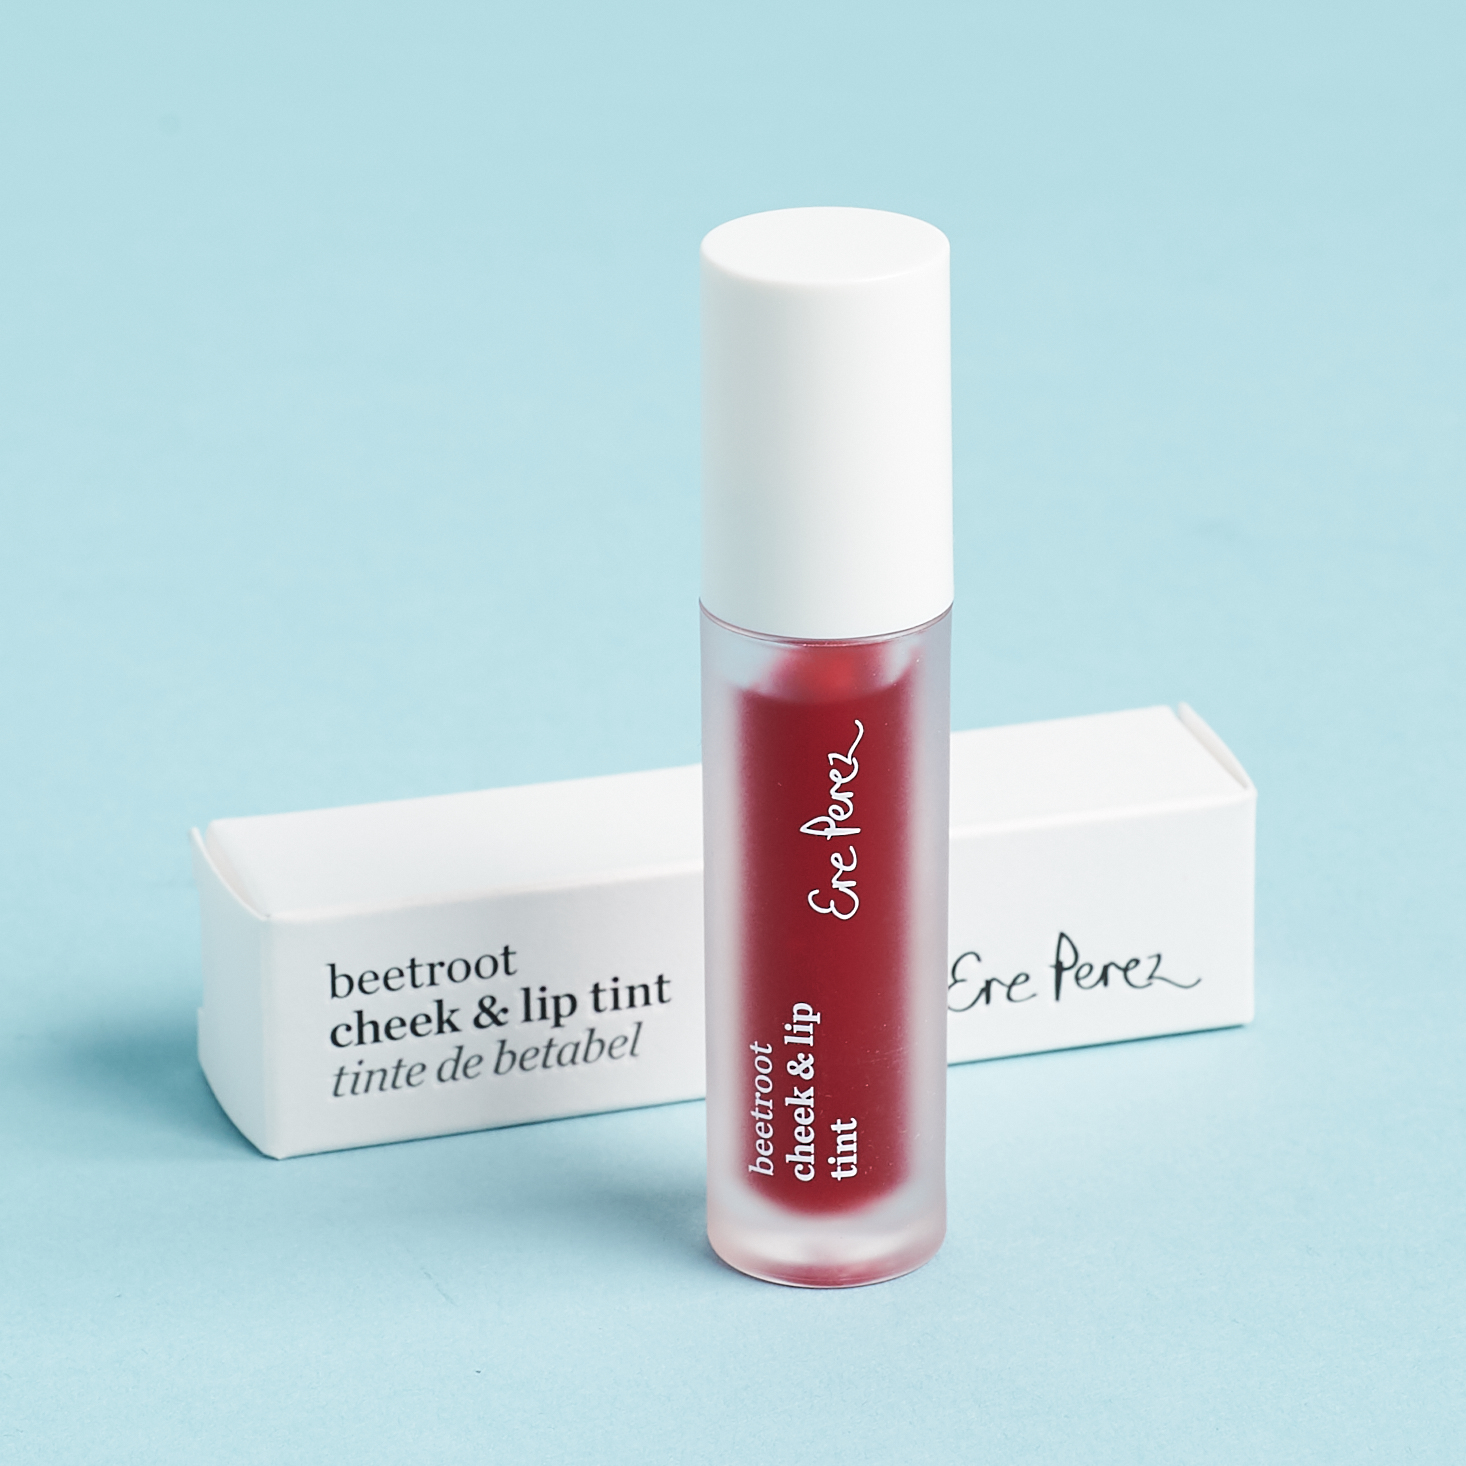 Ere Perez Beetroot Cheek & Lip Tint in Joy with box